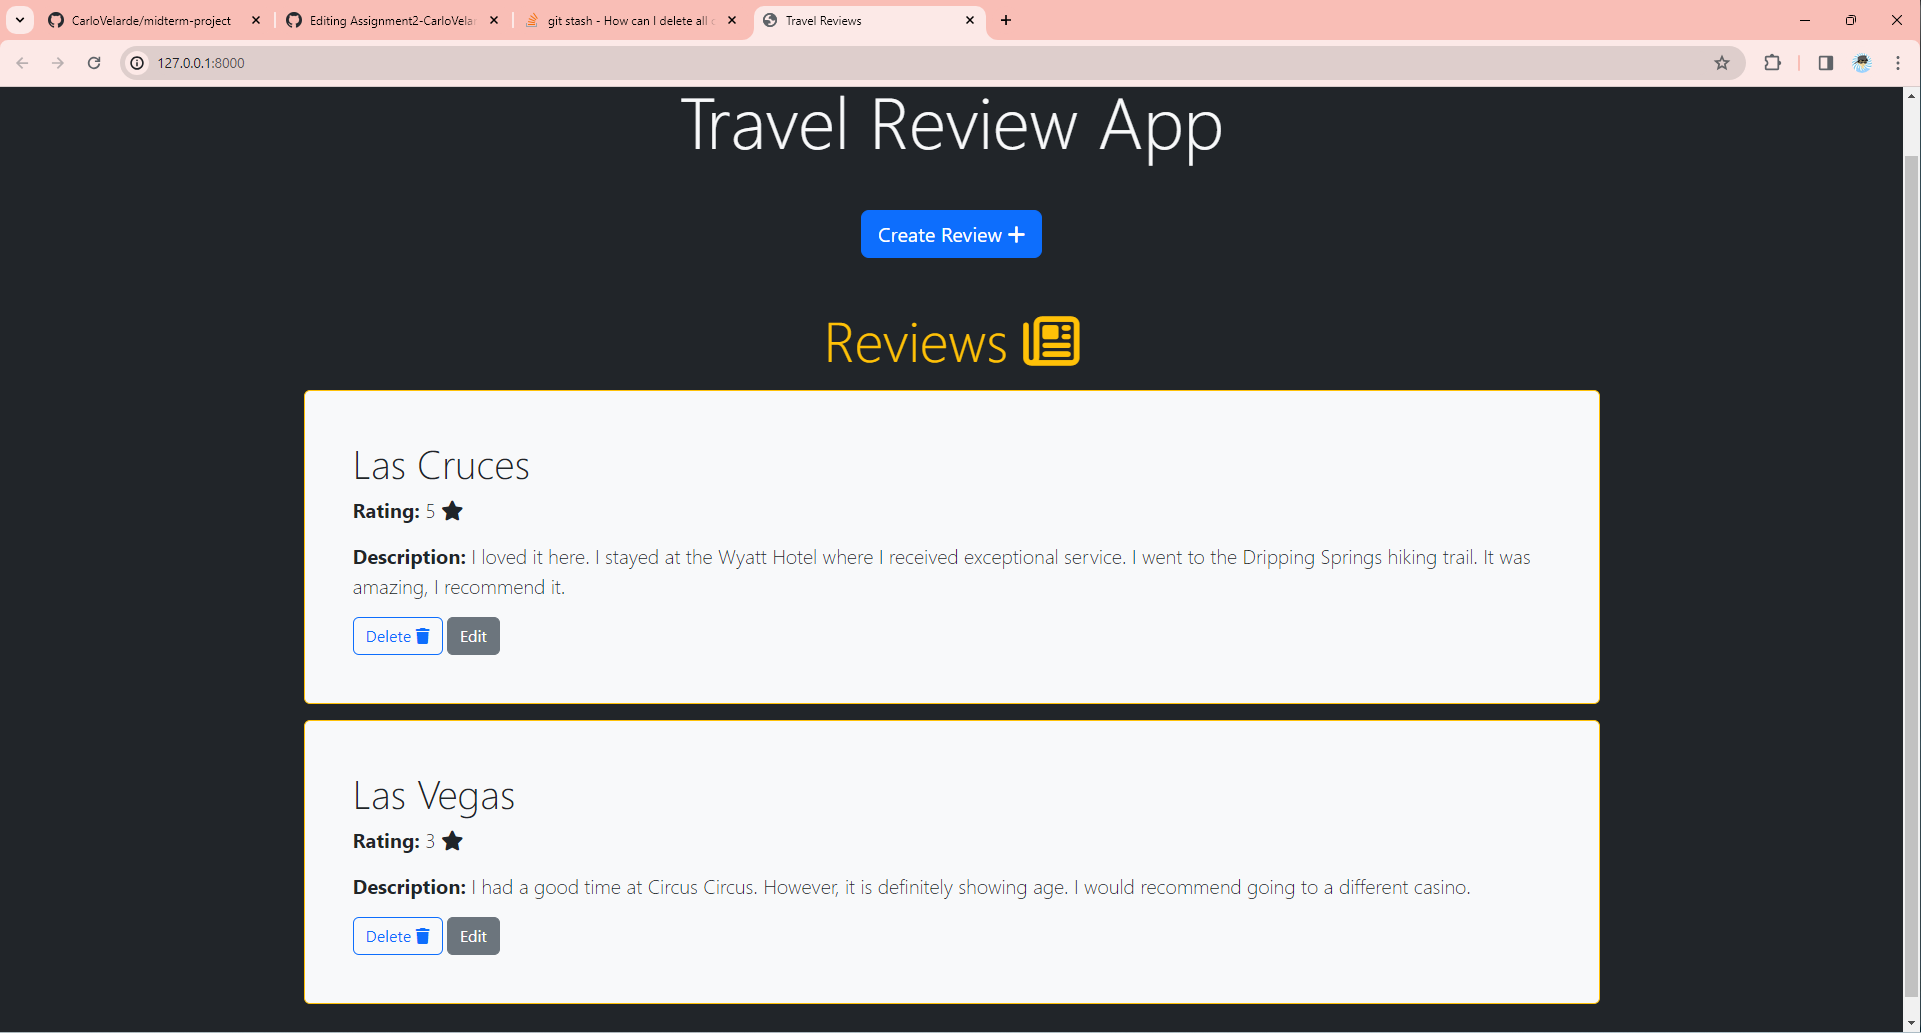 travel app